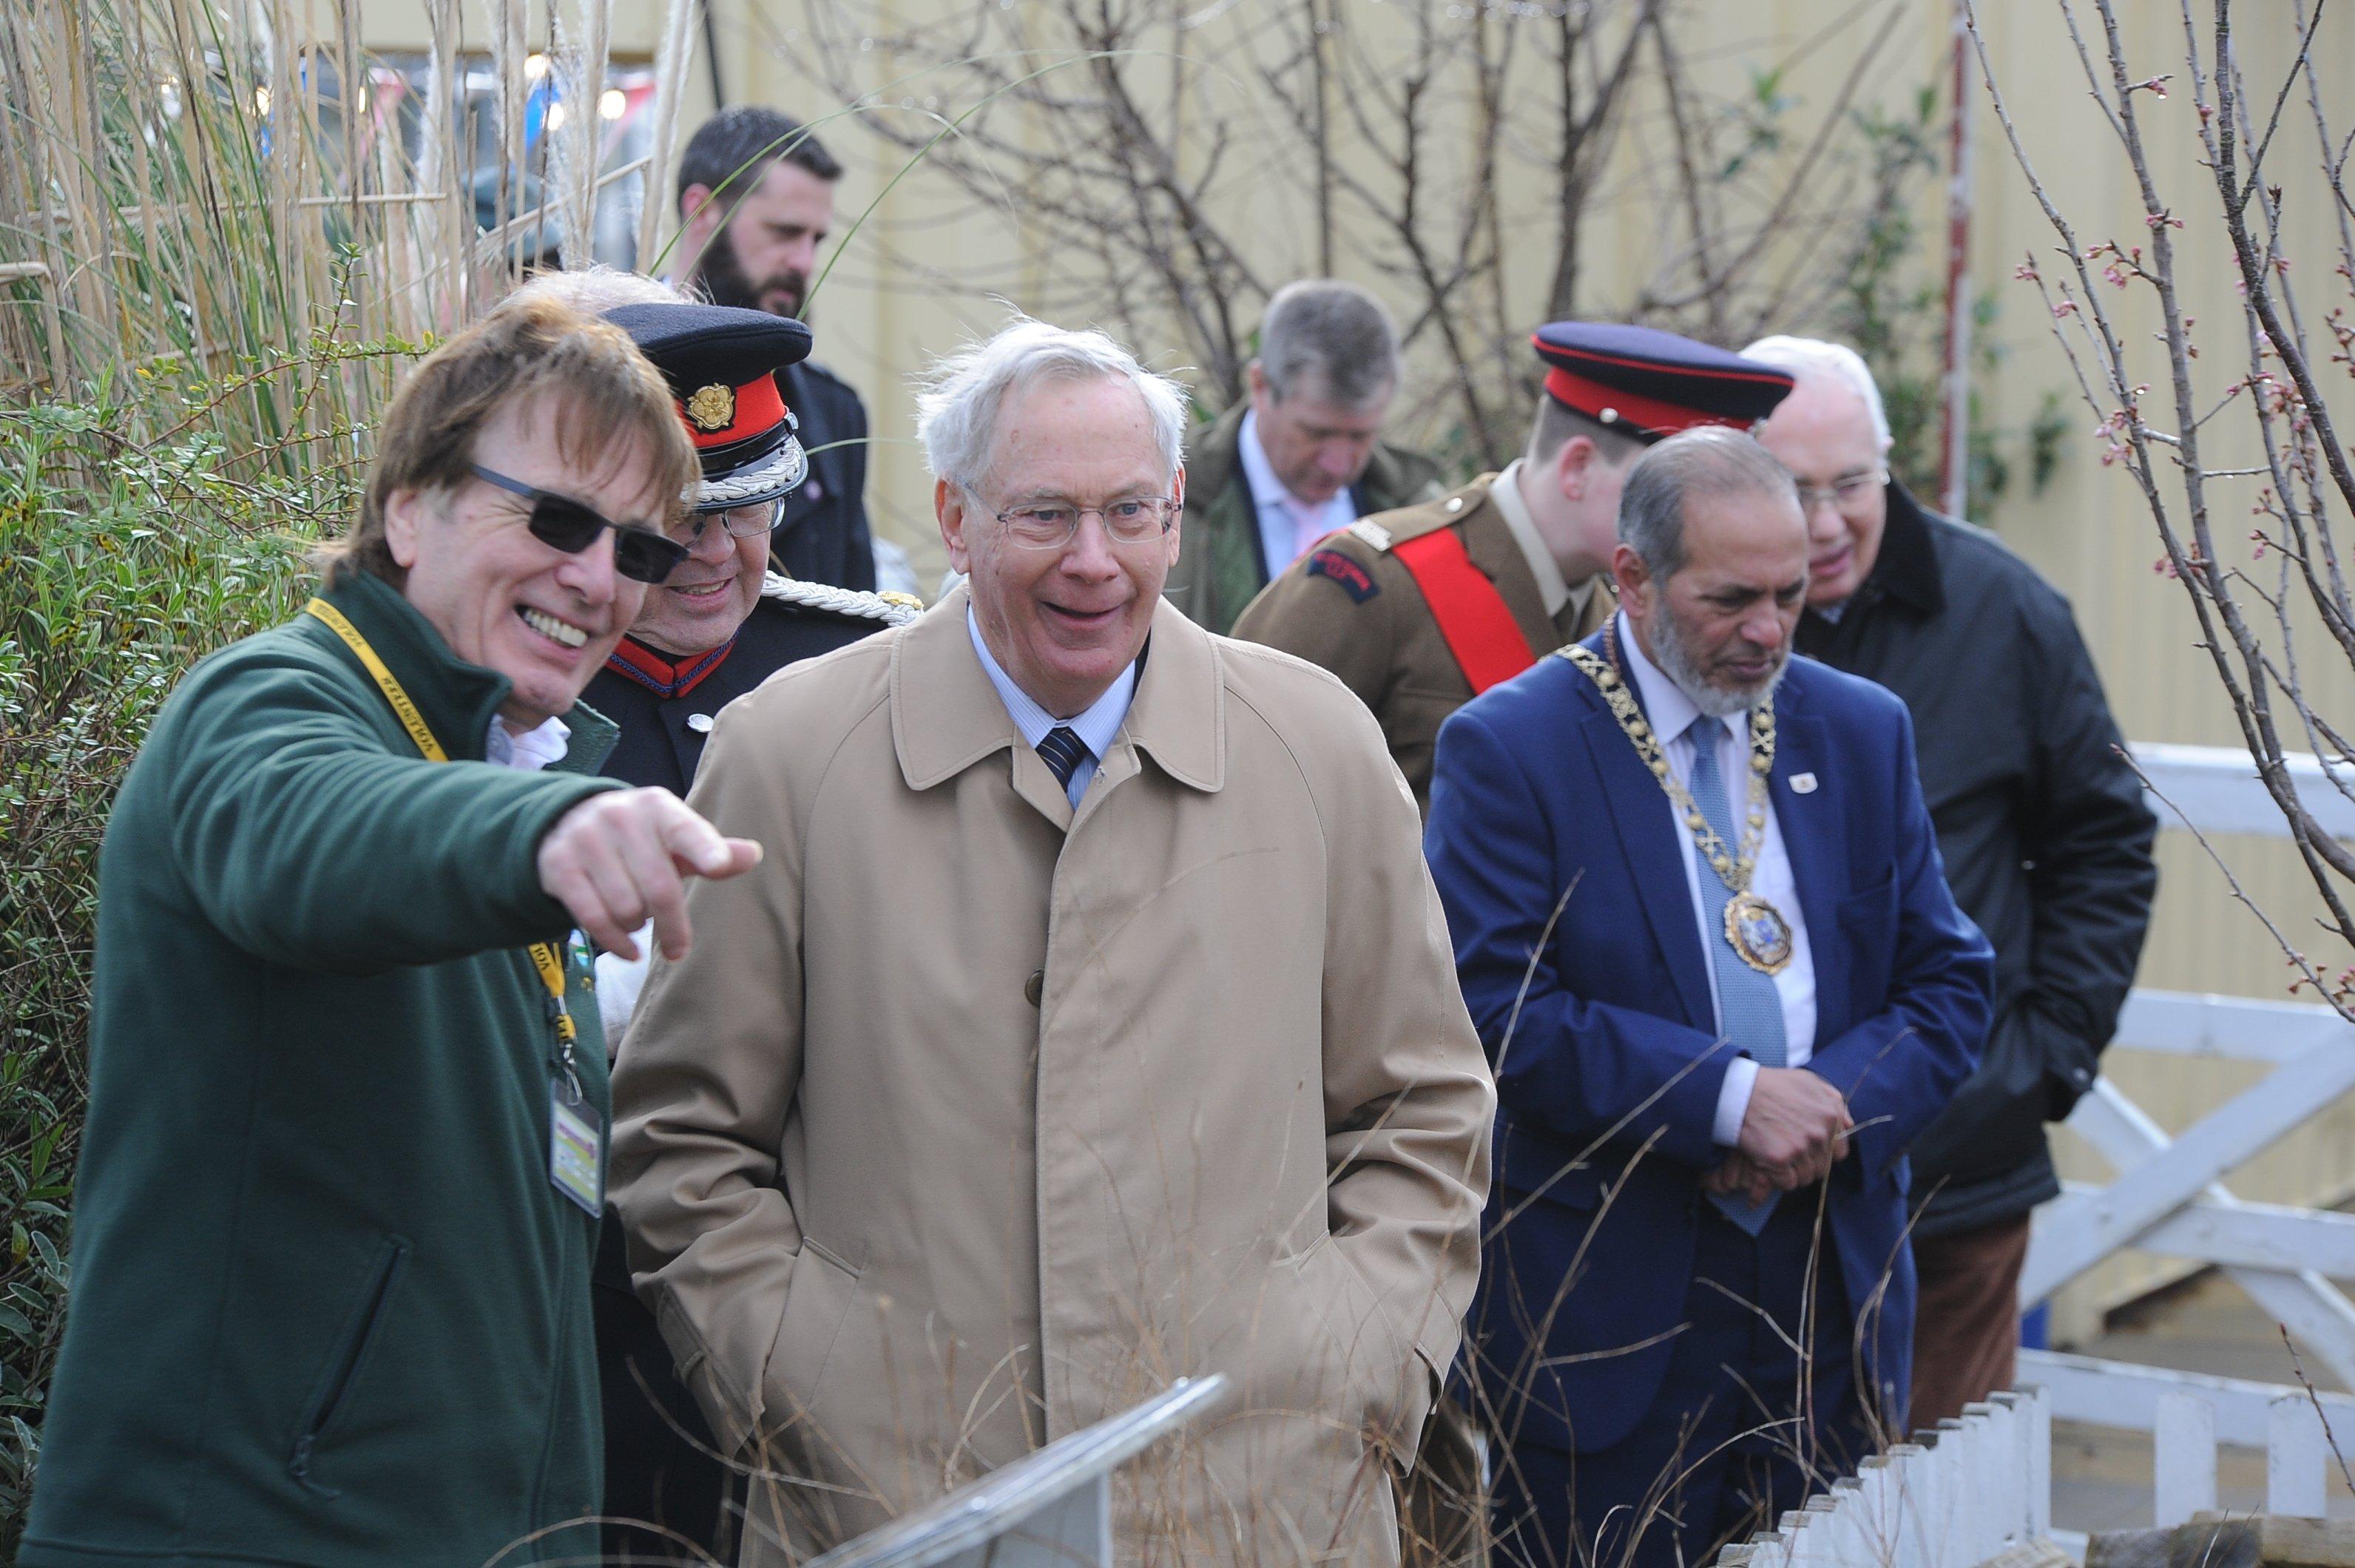 Duke of Gloucester visits Railworld in Peterborough EMN-200227-174038009